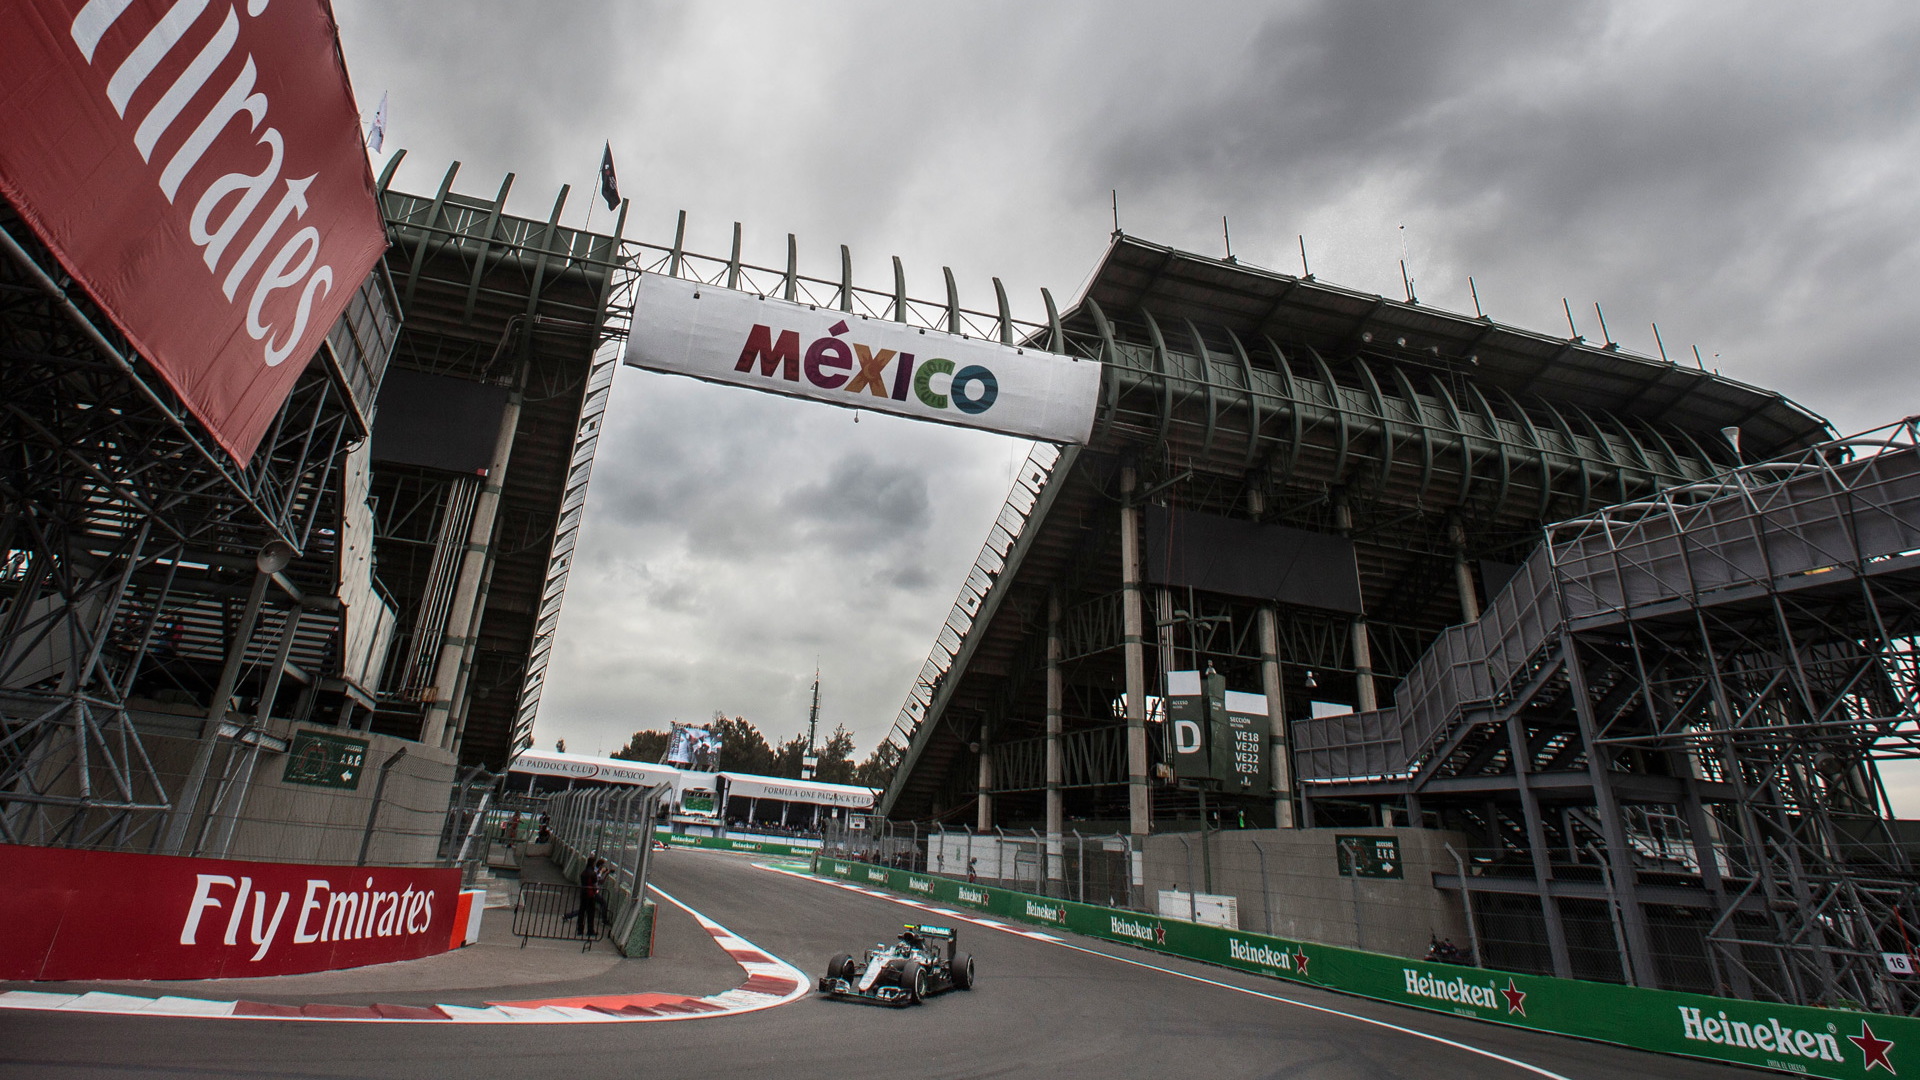 Autódromo Hermanos Rodríguez, home of the Formula 1 Mexican Grand Prix